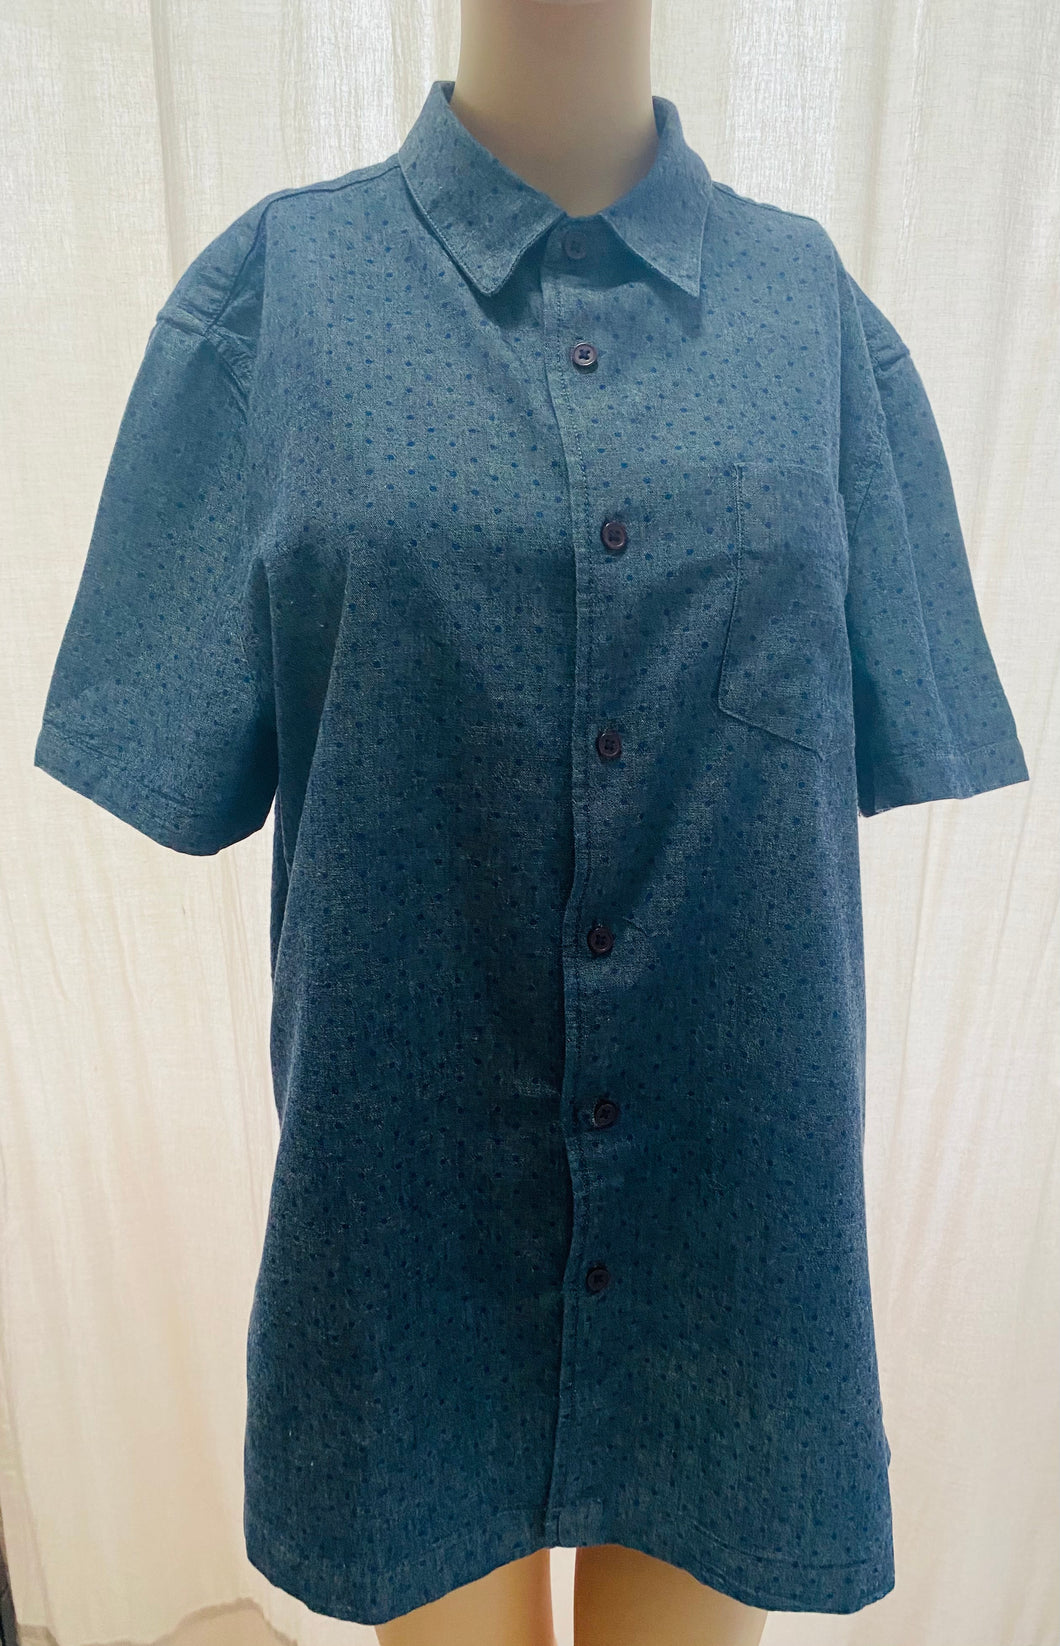 ASOS Grey Short Sleeve Shirt With Blue Dots